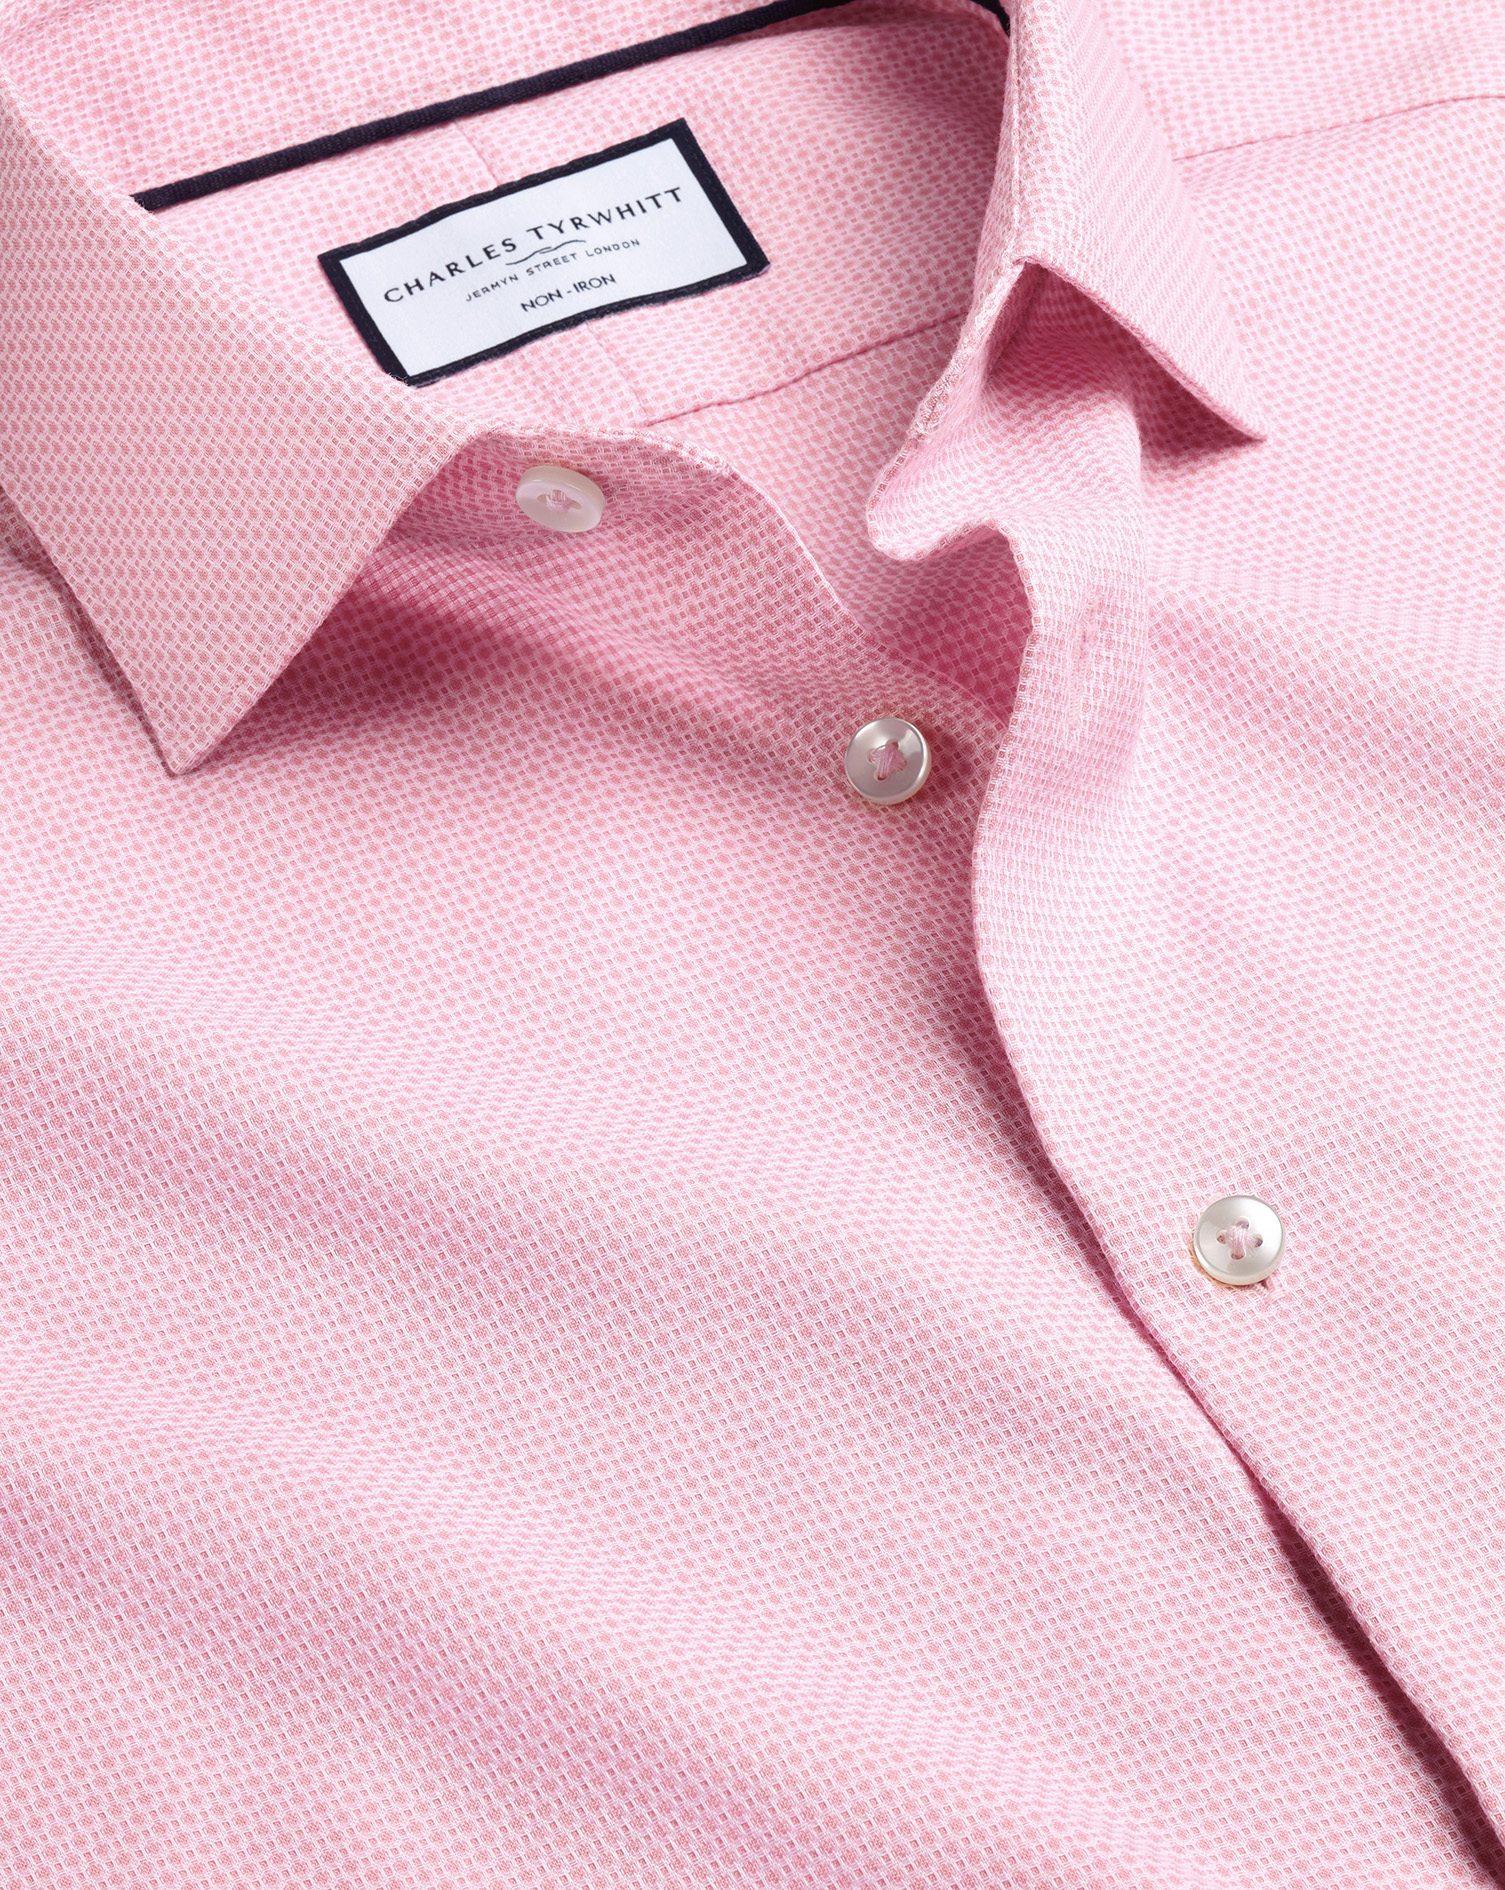 Men's Charles Tyrwhitt Non-Iron Stretch Texture Oval Dress Shirt - Pink Single Cuff Size 15.5/33 Cot